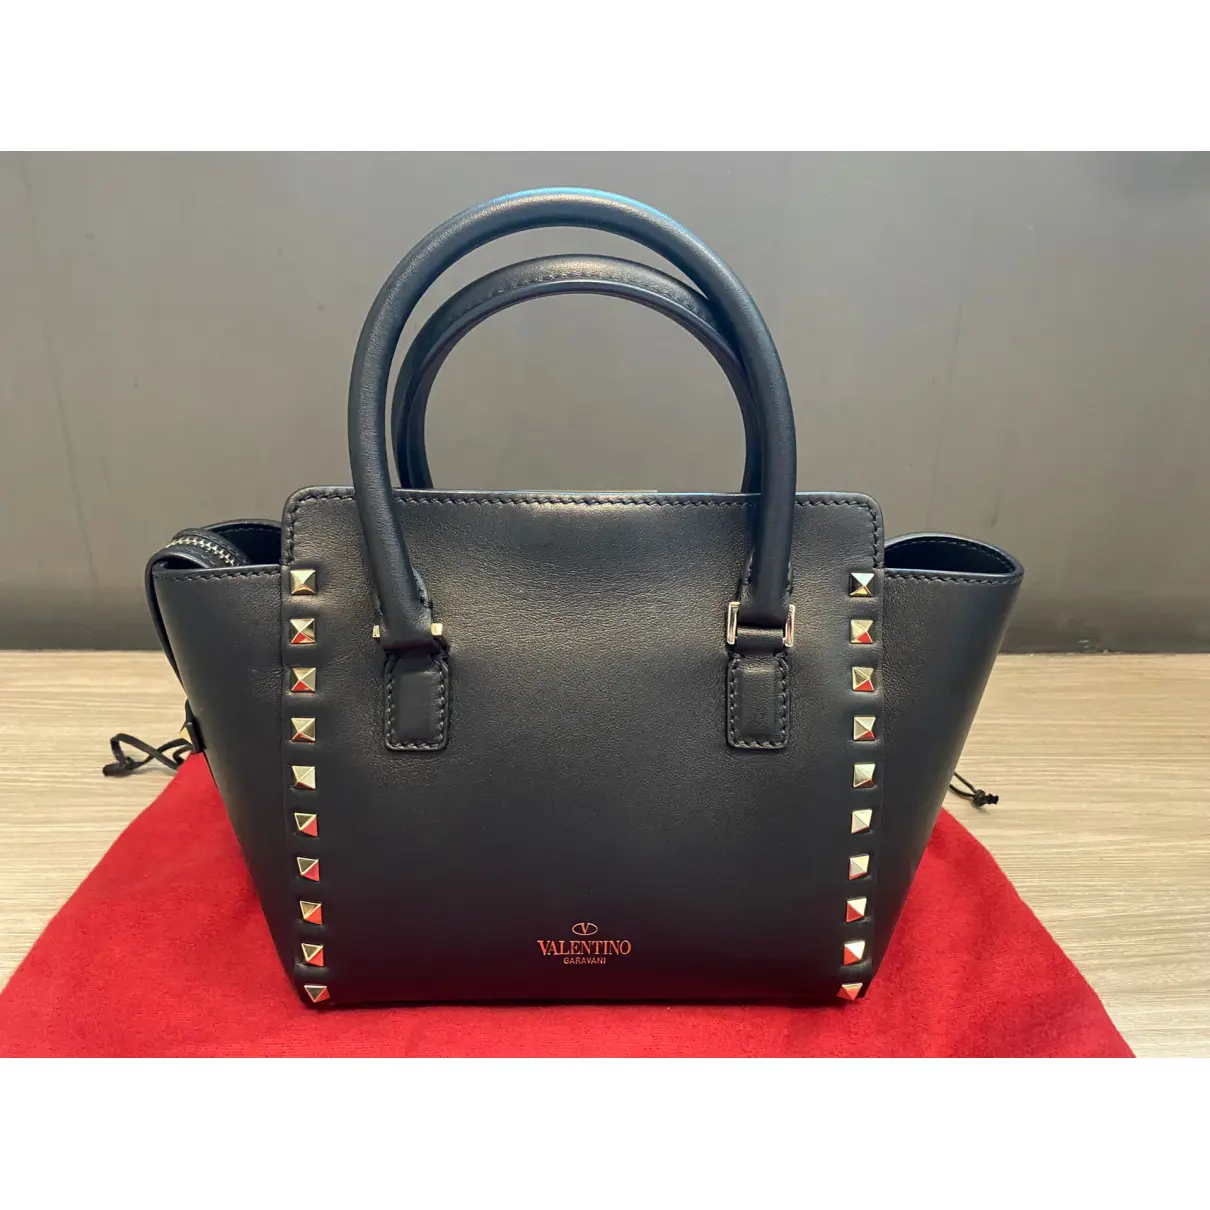 Buy Valentino Garavani Micro Rockstud leather handbag online